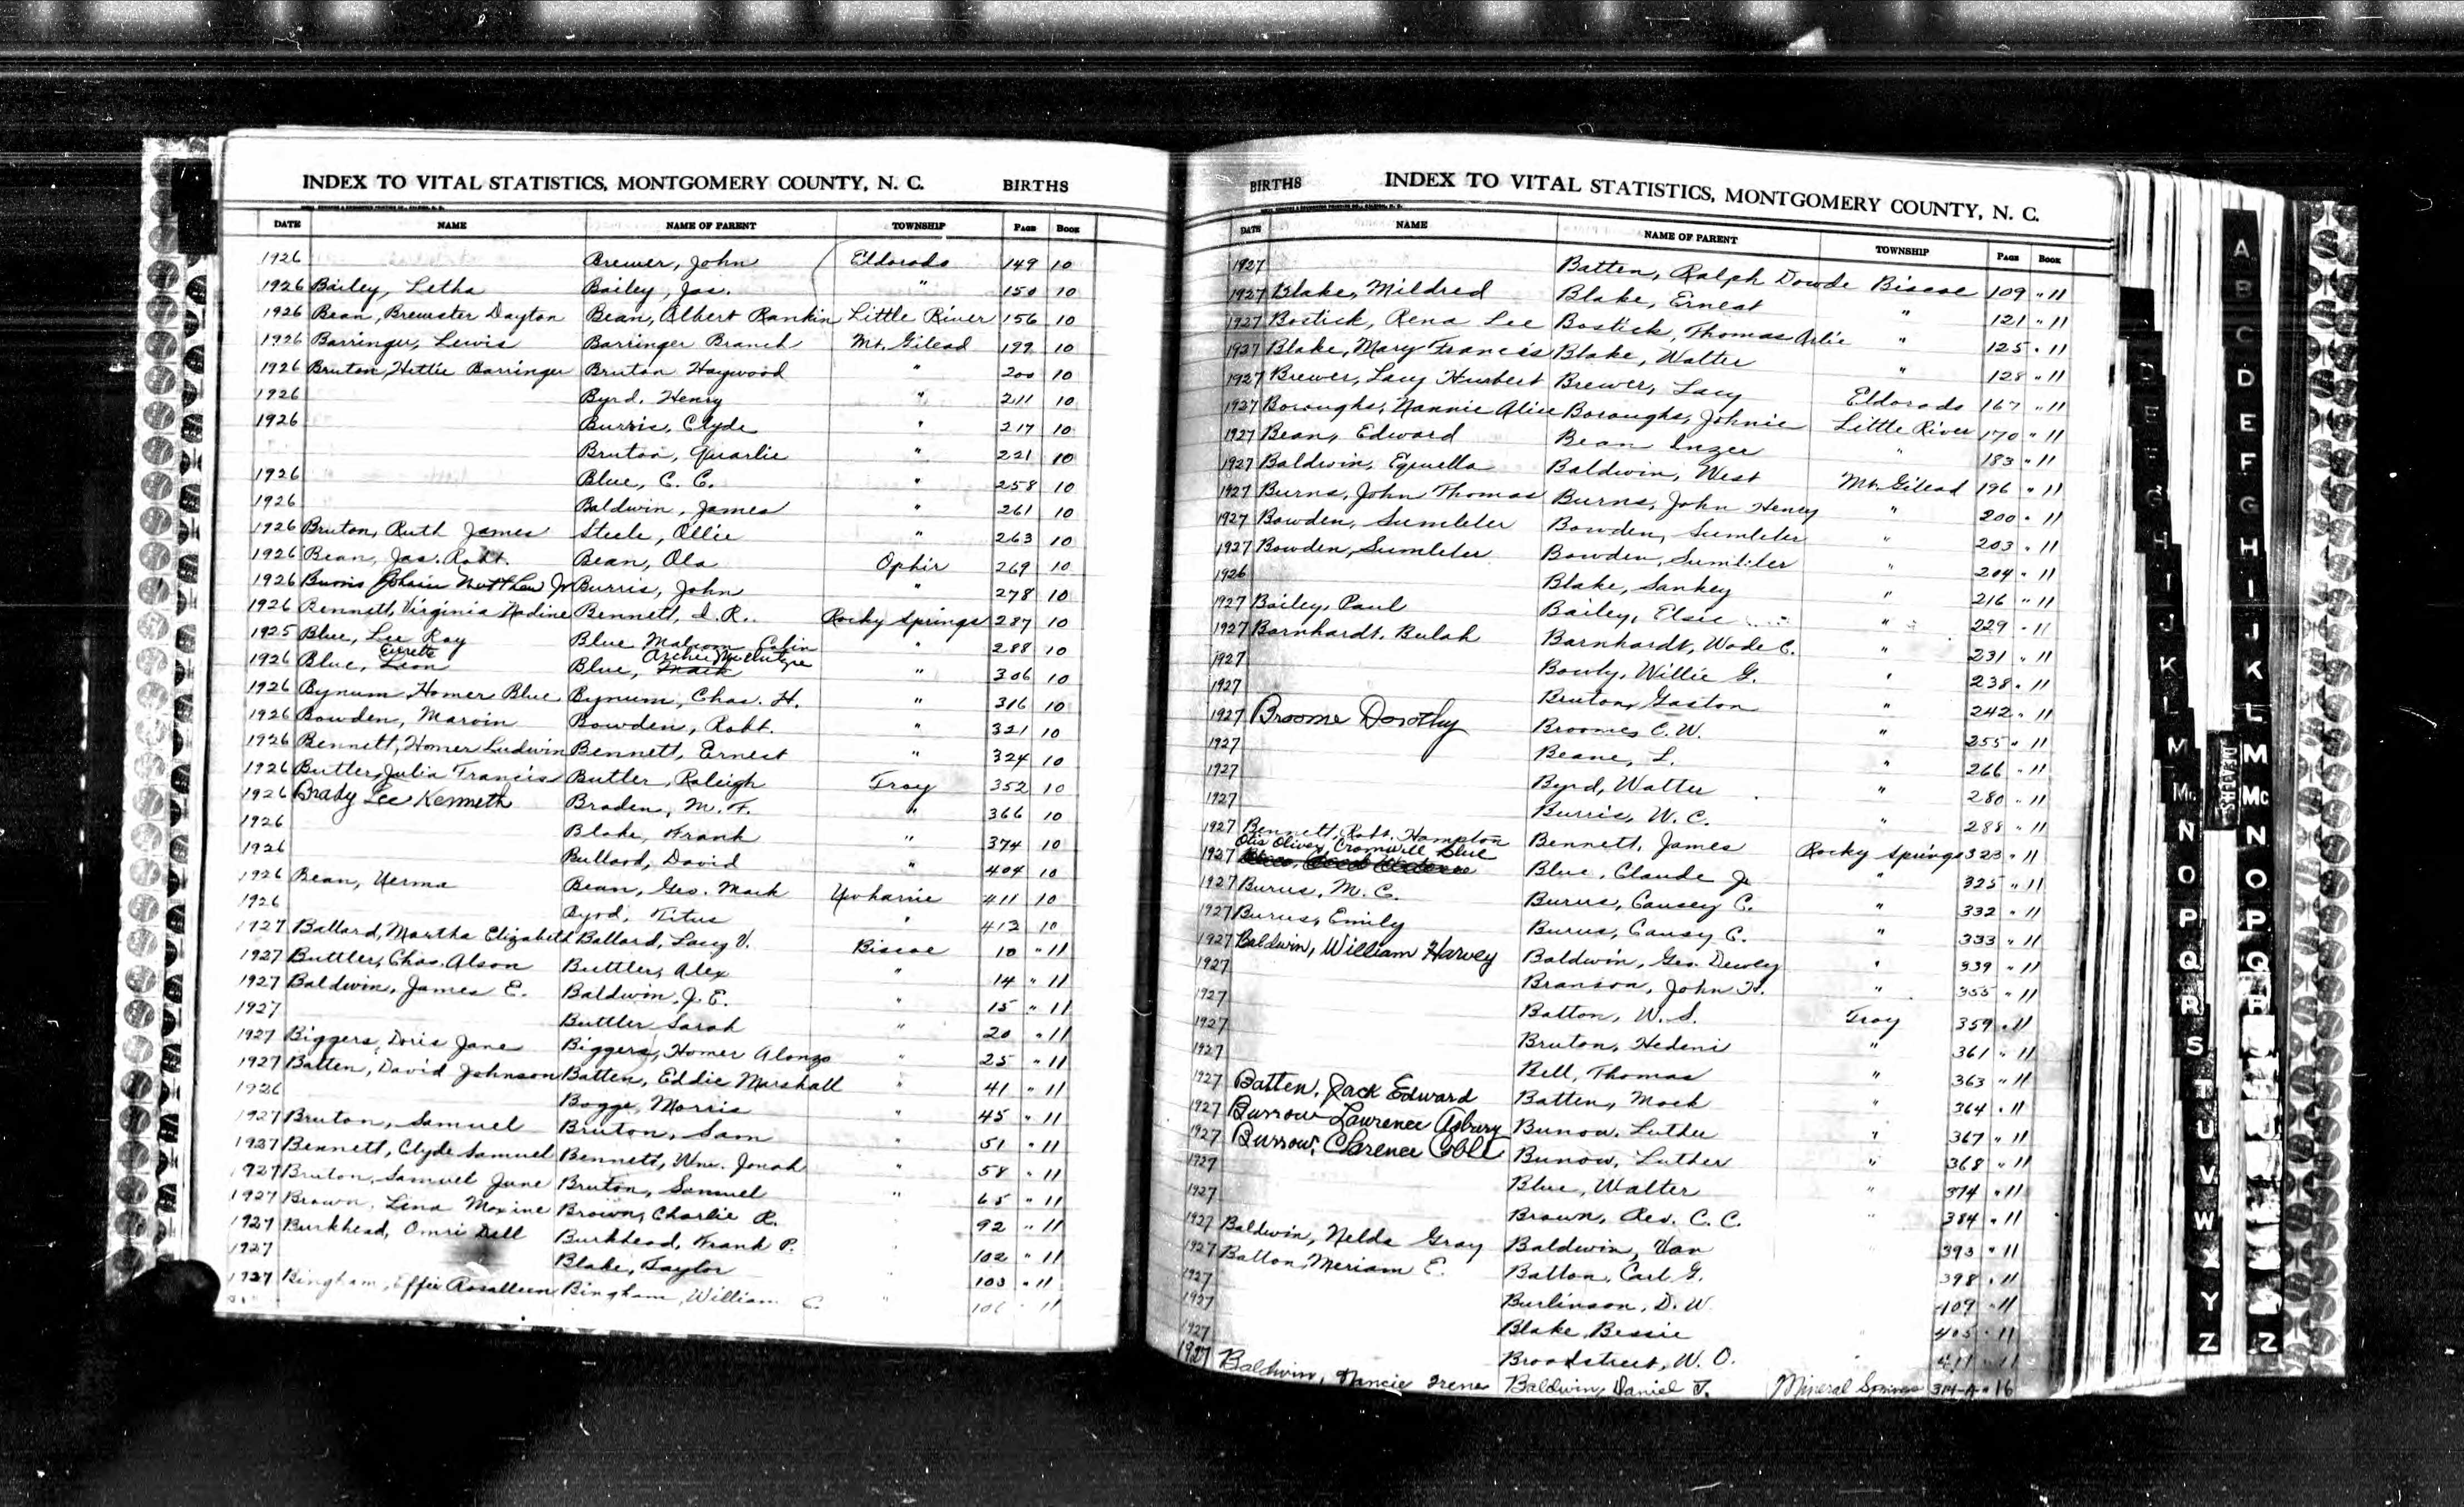 1926 Birth Record of Montgomery County, North Carolina